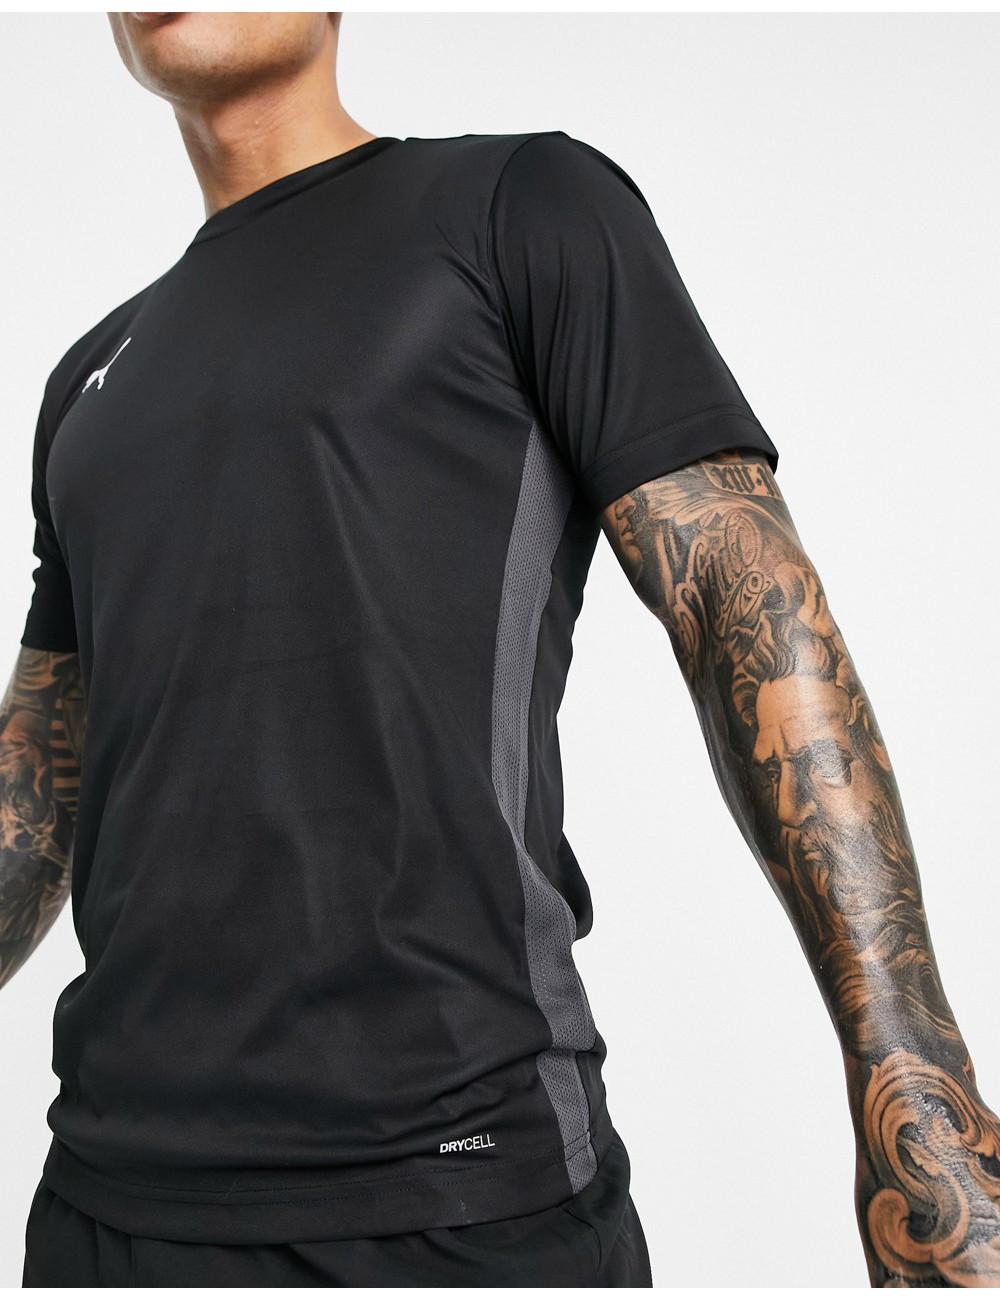 Puma Football shirt in black